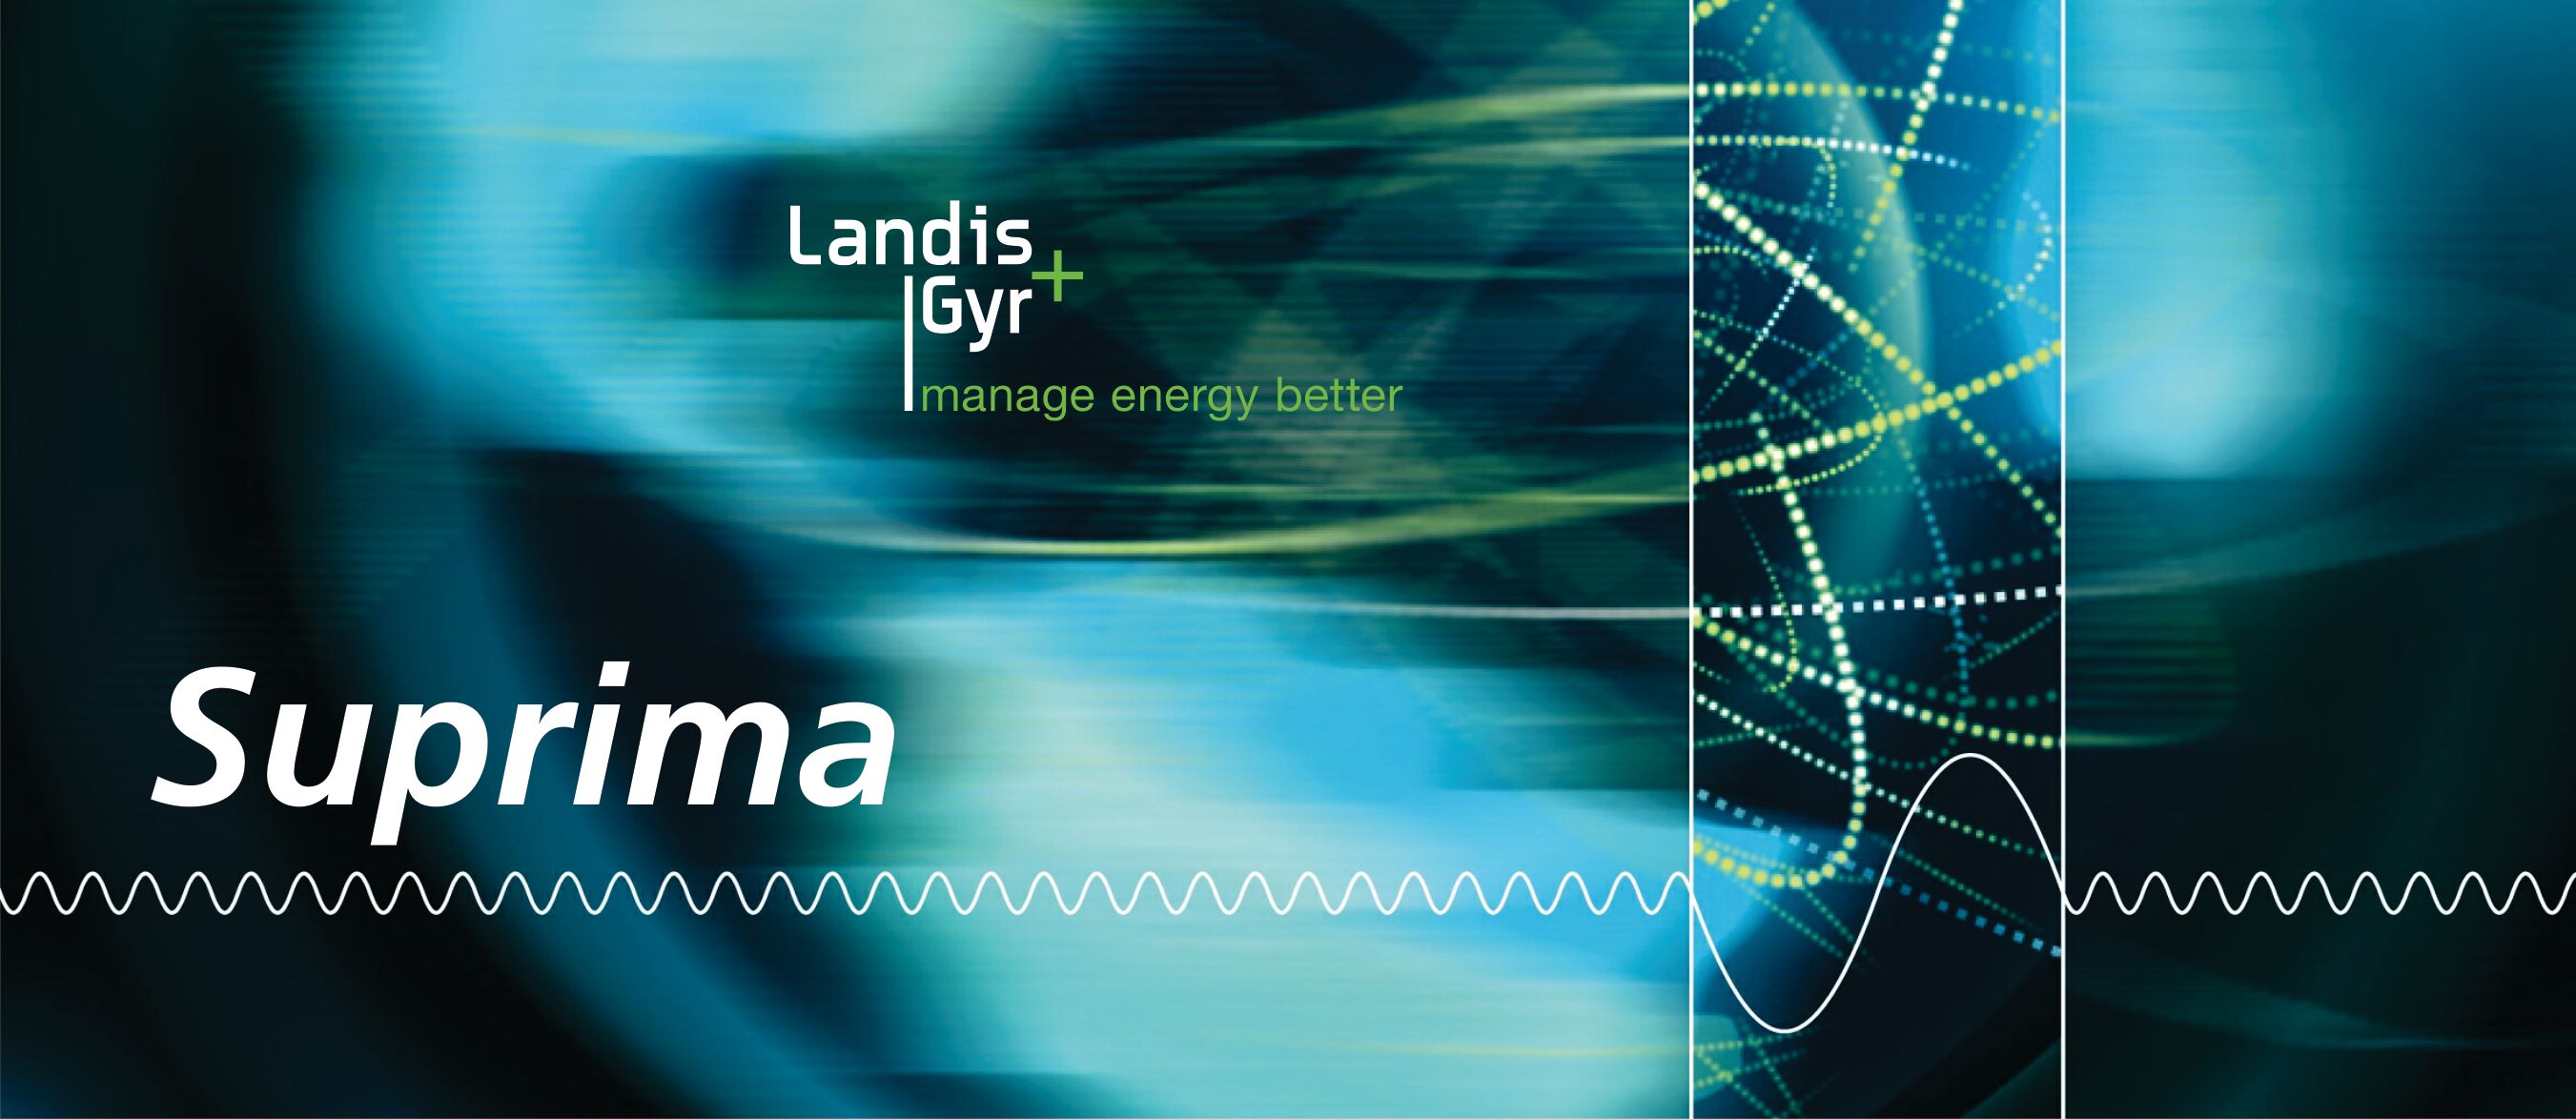 Landis+Gyr: Suprima the Next Generation